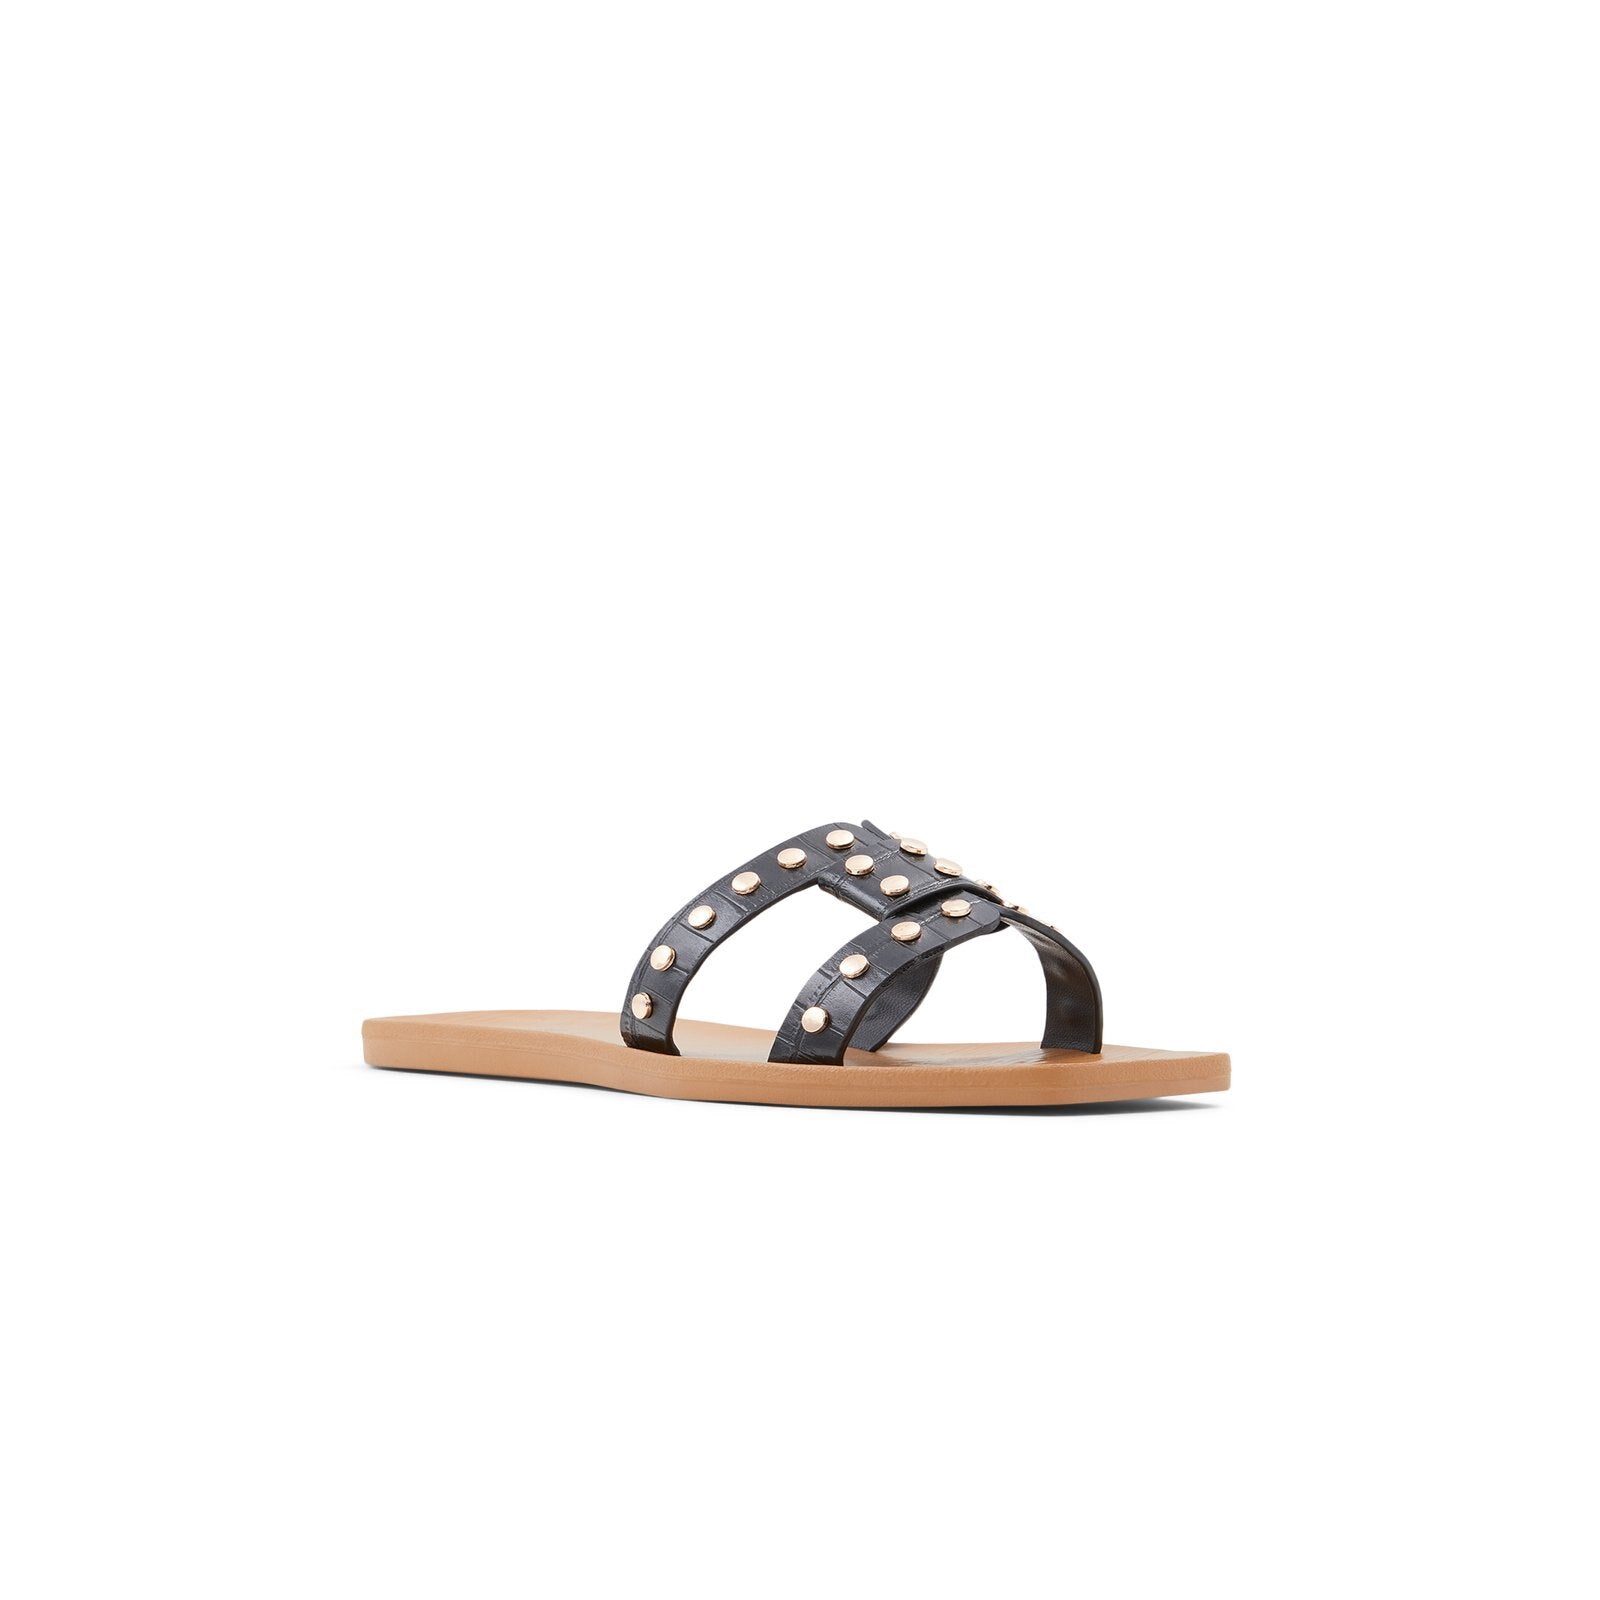 Chirassa / Flat Sandals Women Shoes - Black - CALL IT SPRING KSA